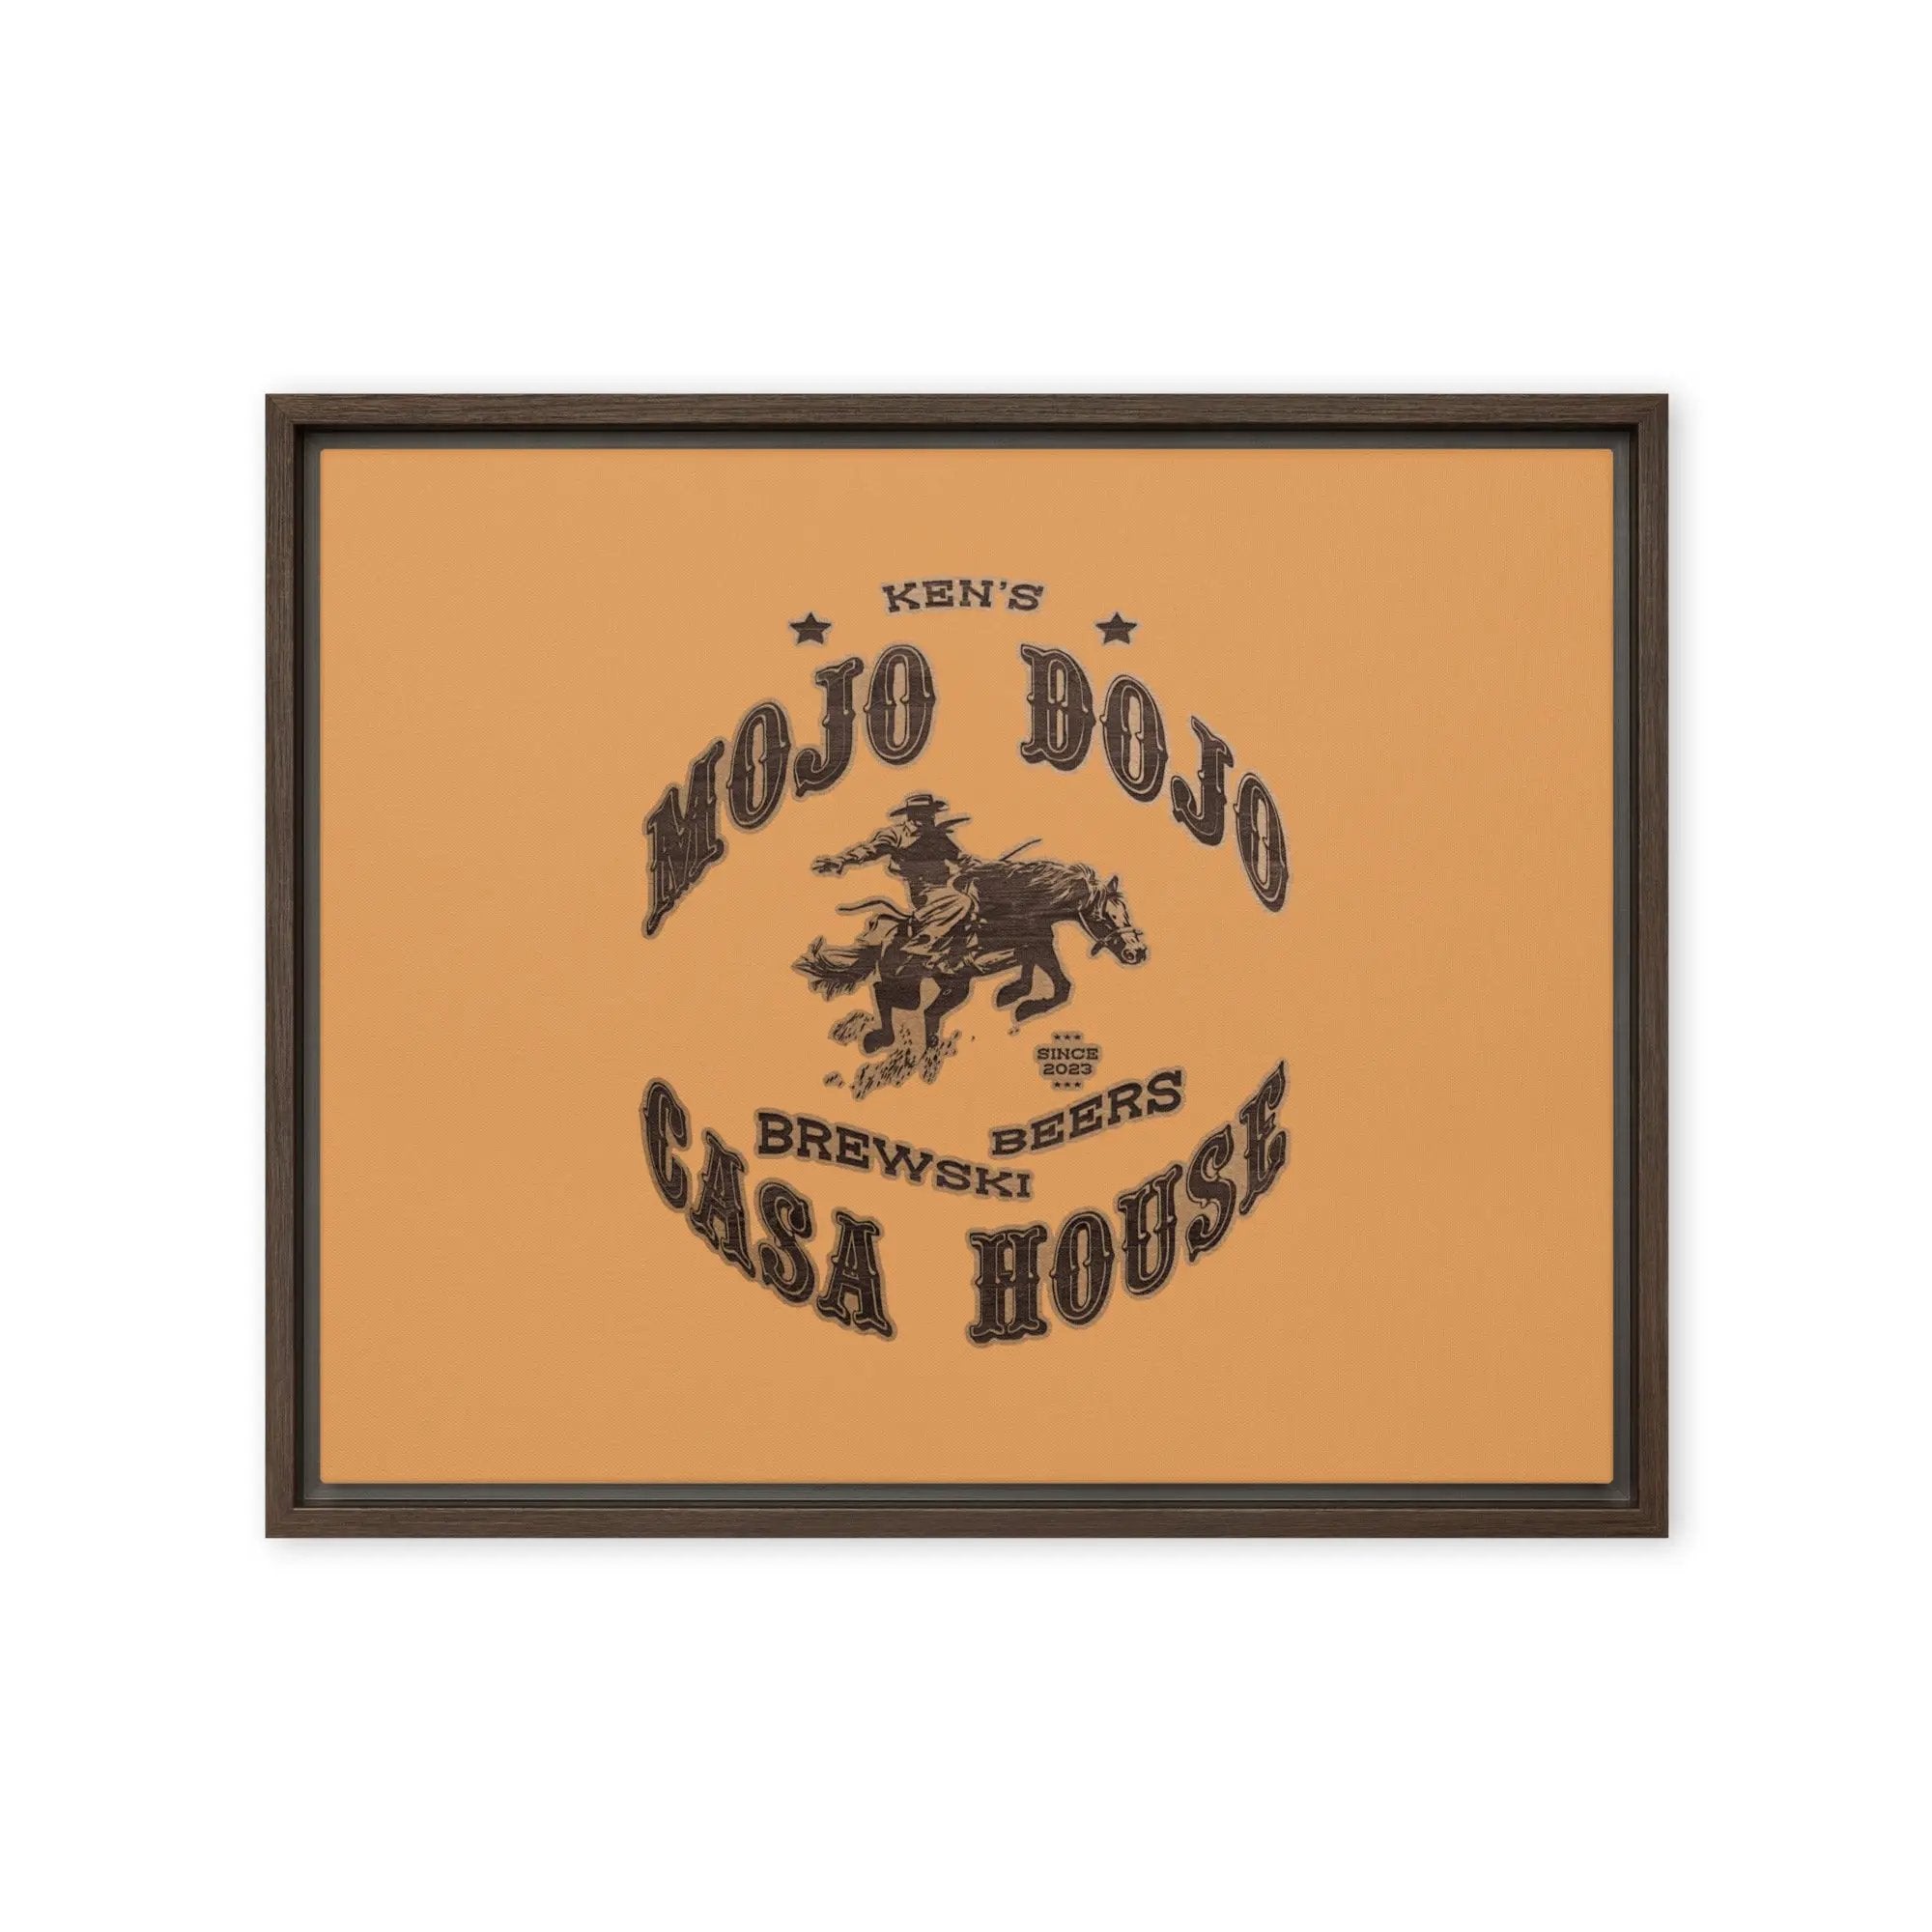 Mojo Dojo Casa House Framed canvas